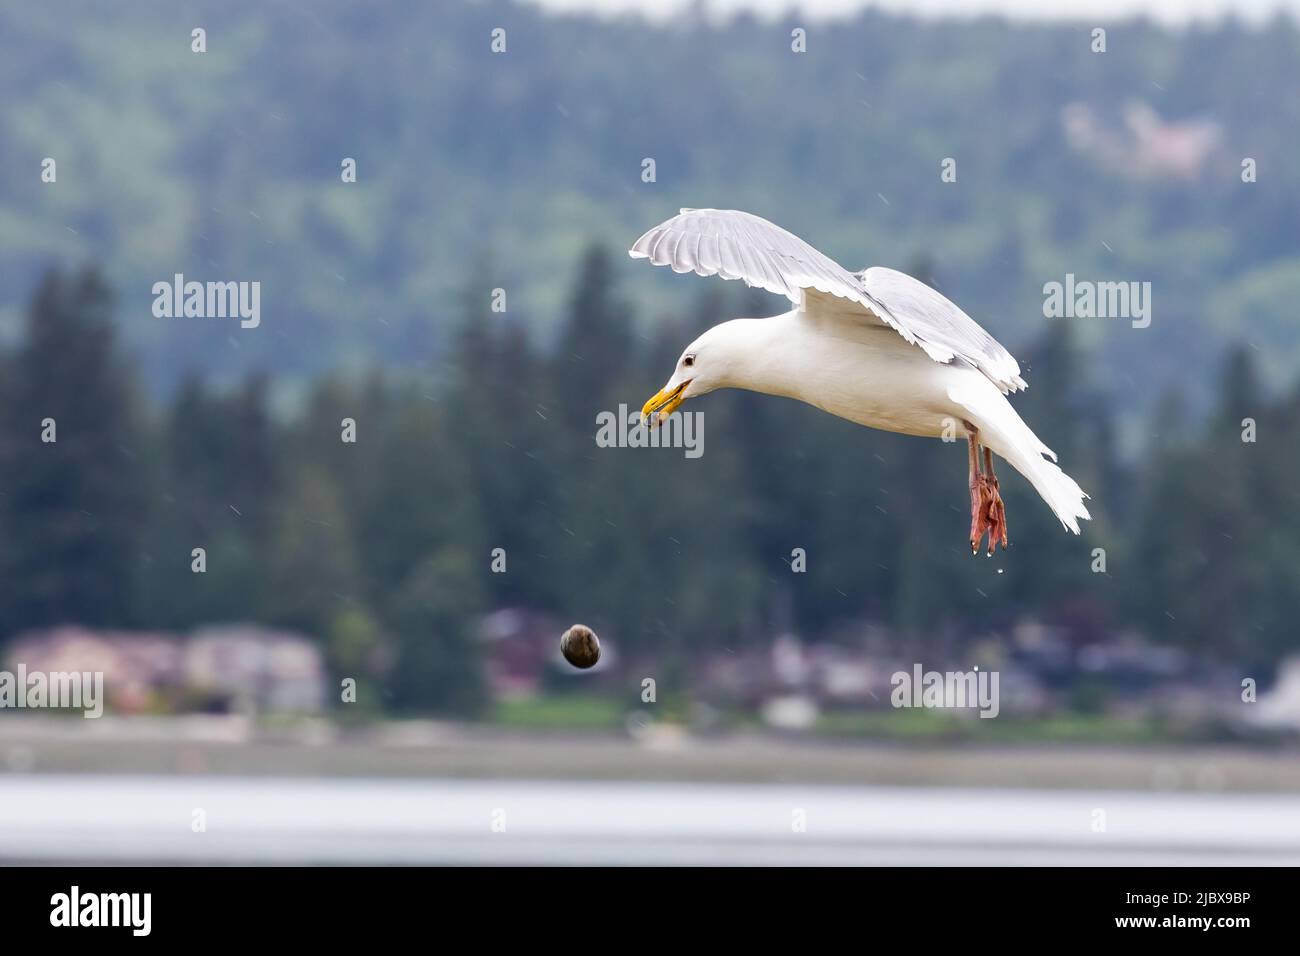 A gull in flight dropping a clam to break it open in Bremerton, Washington. Stock Photo